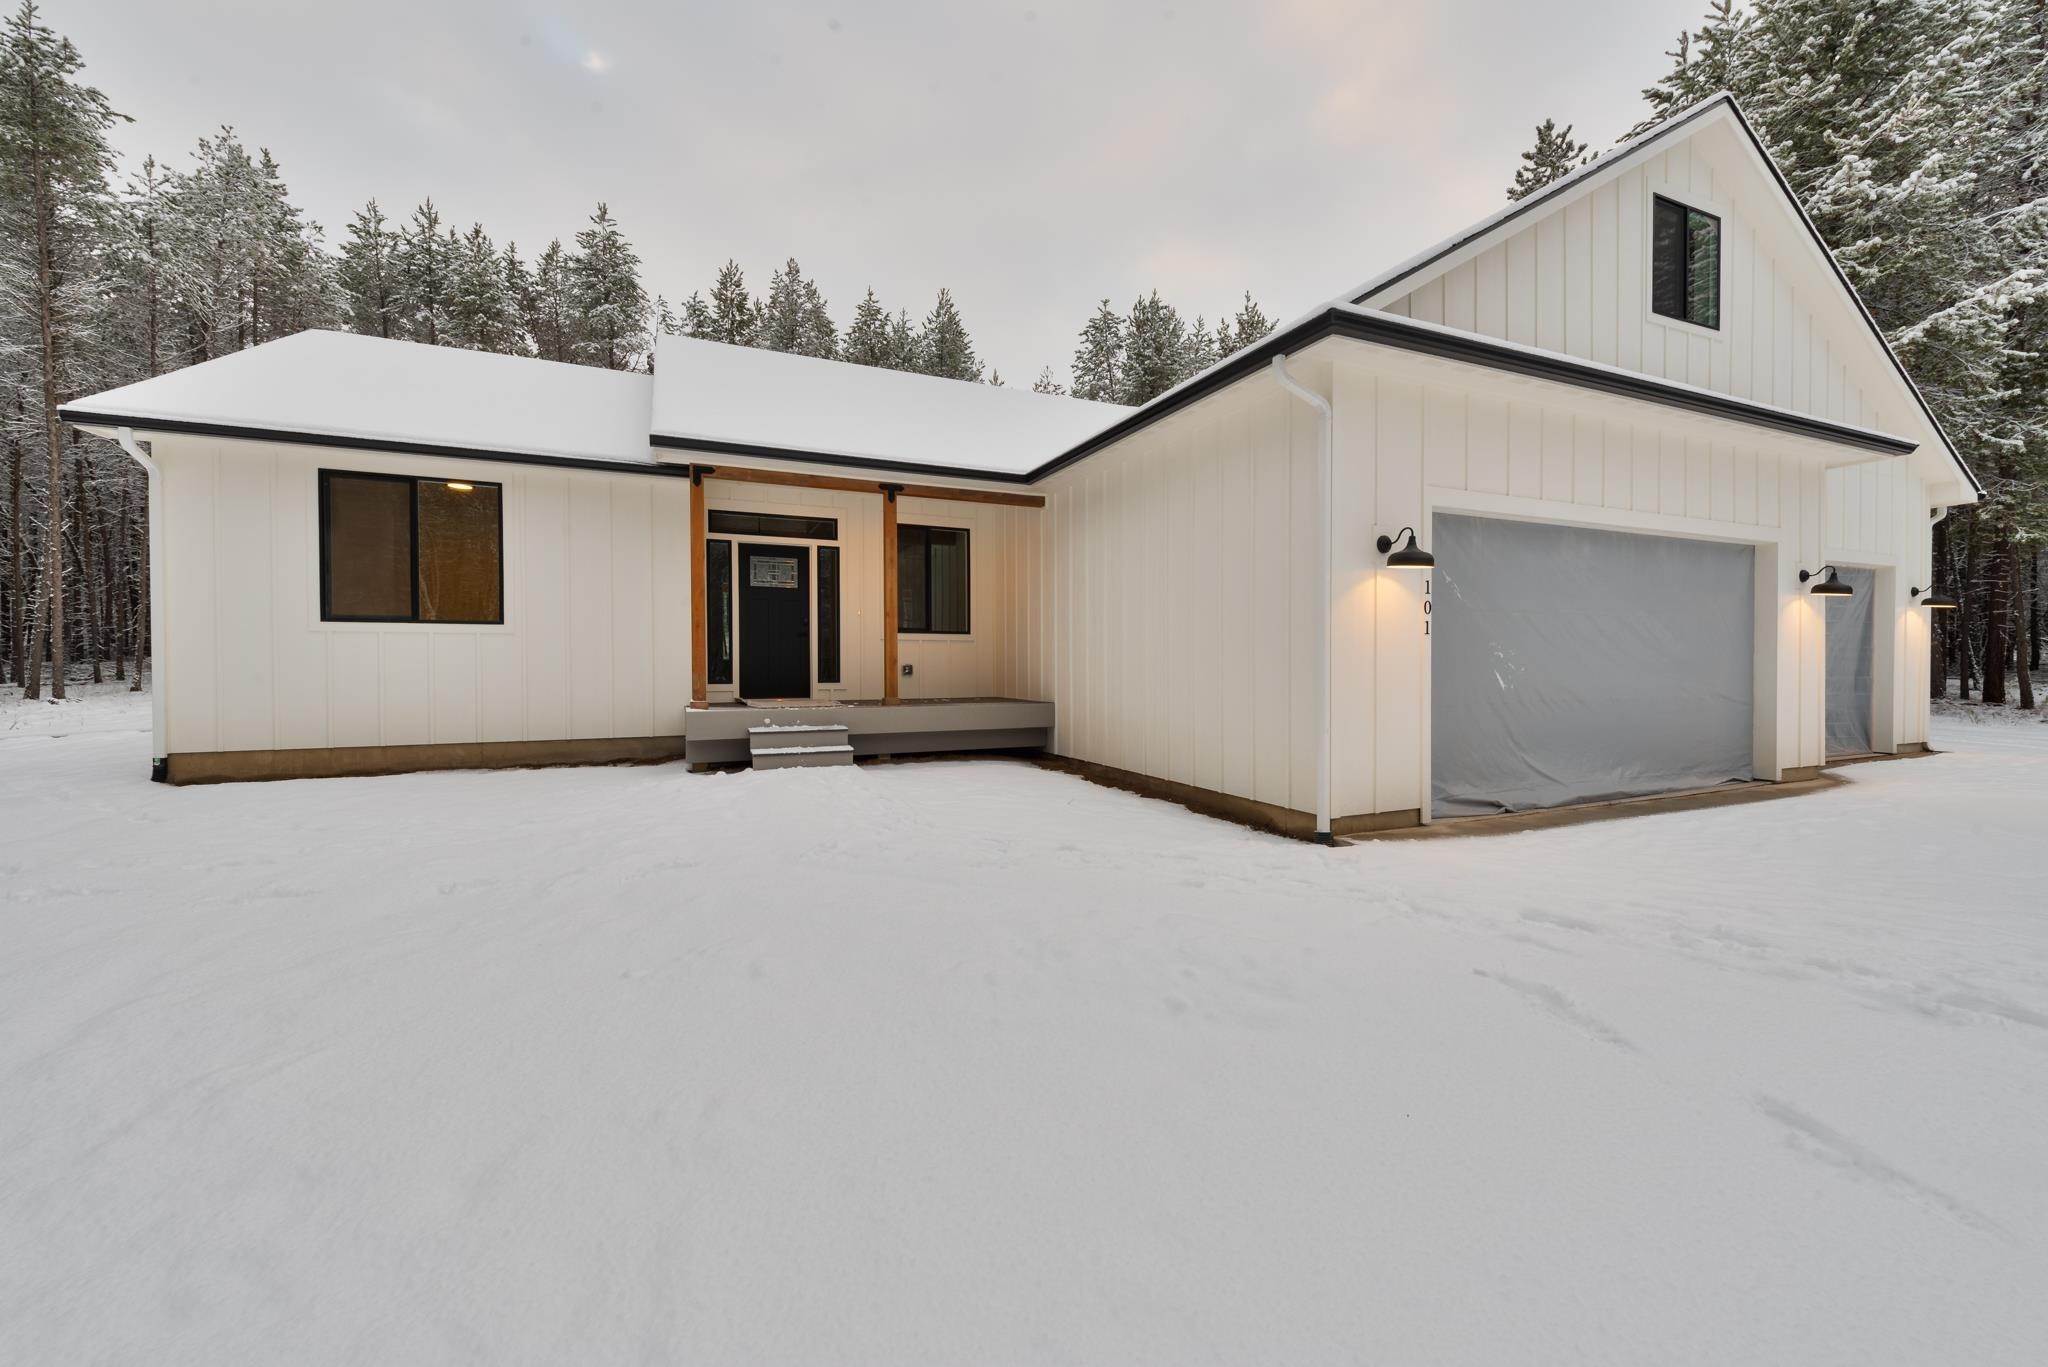 Single Family Homes for Sale at 101 E Saltz Lane Deer Park, Washington 99006 United States